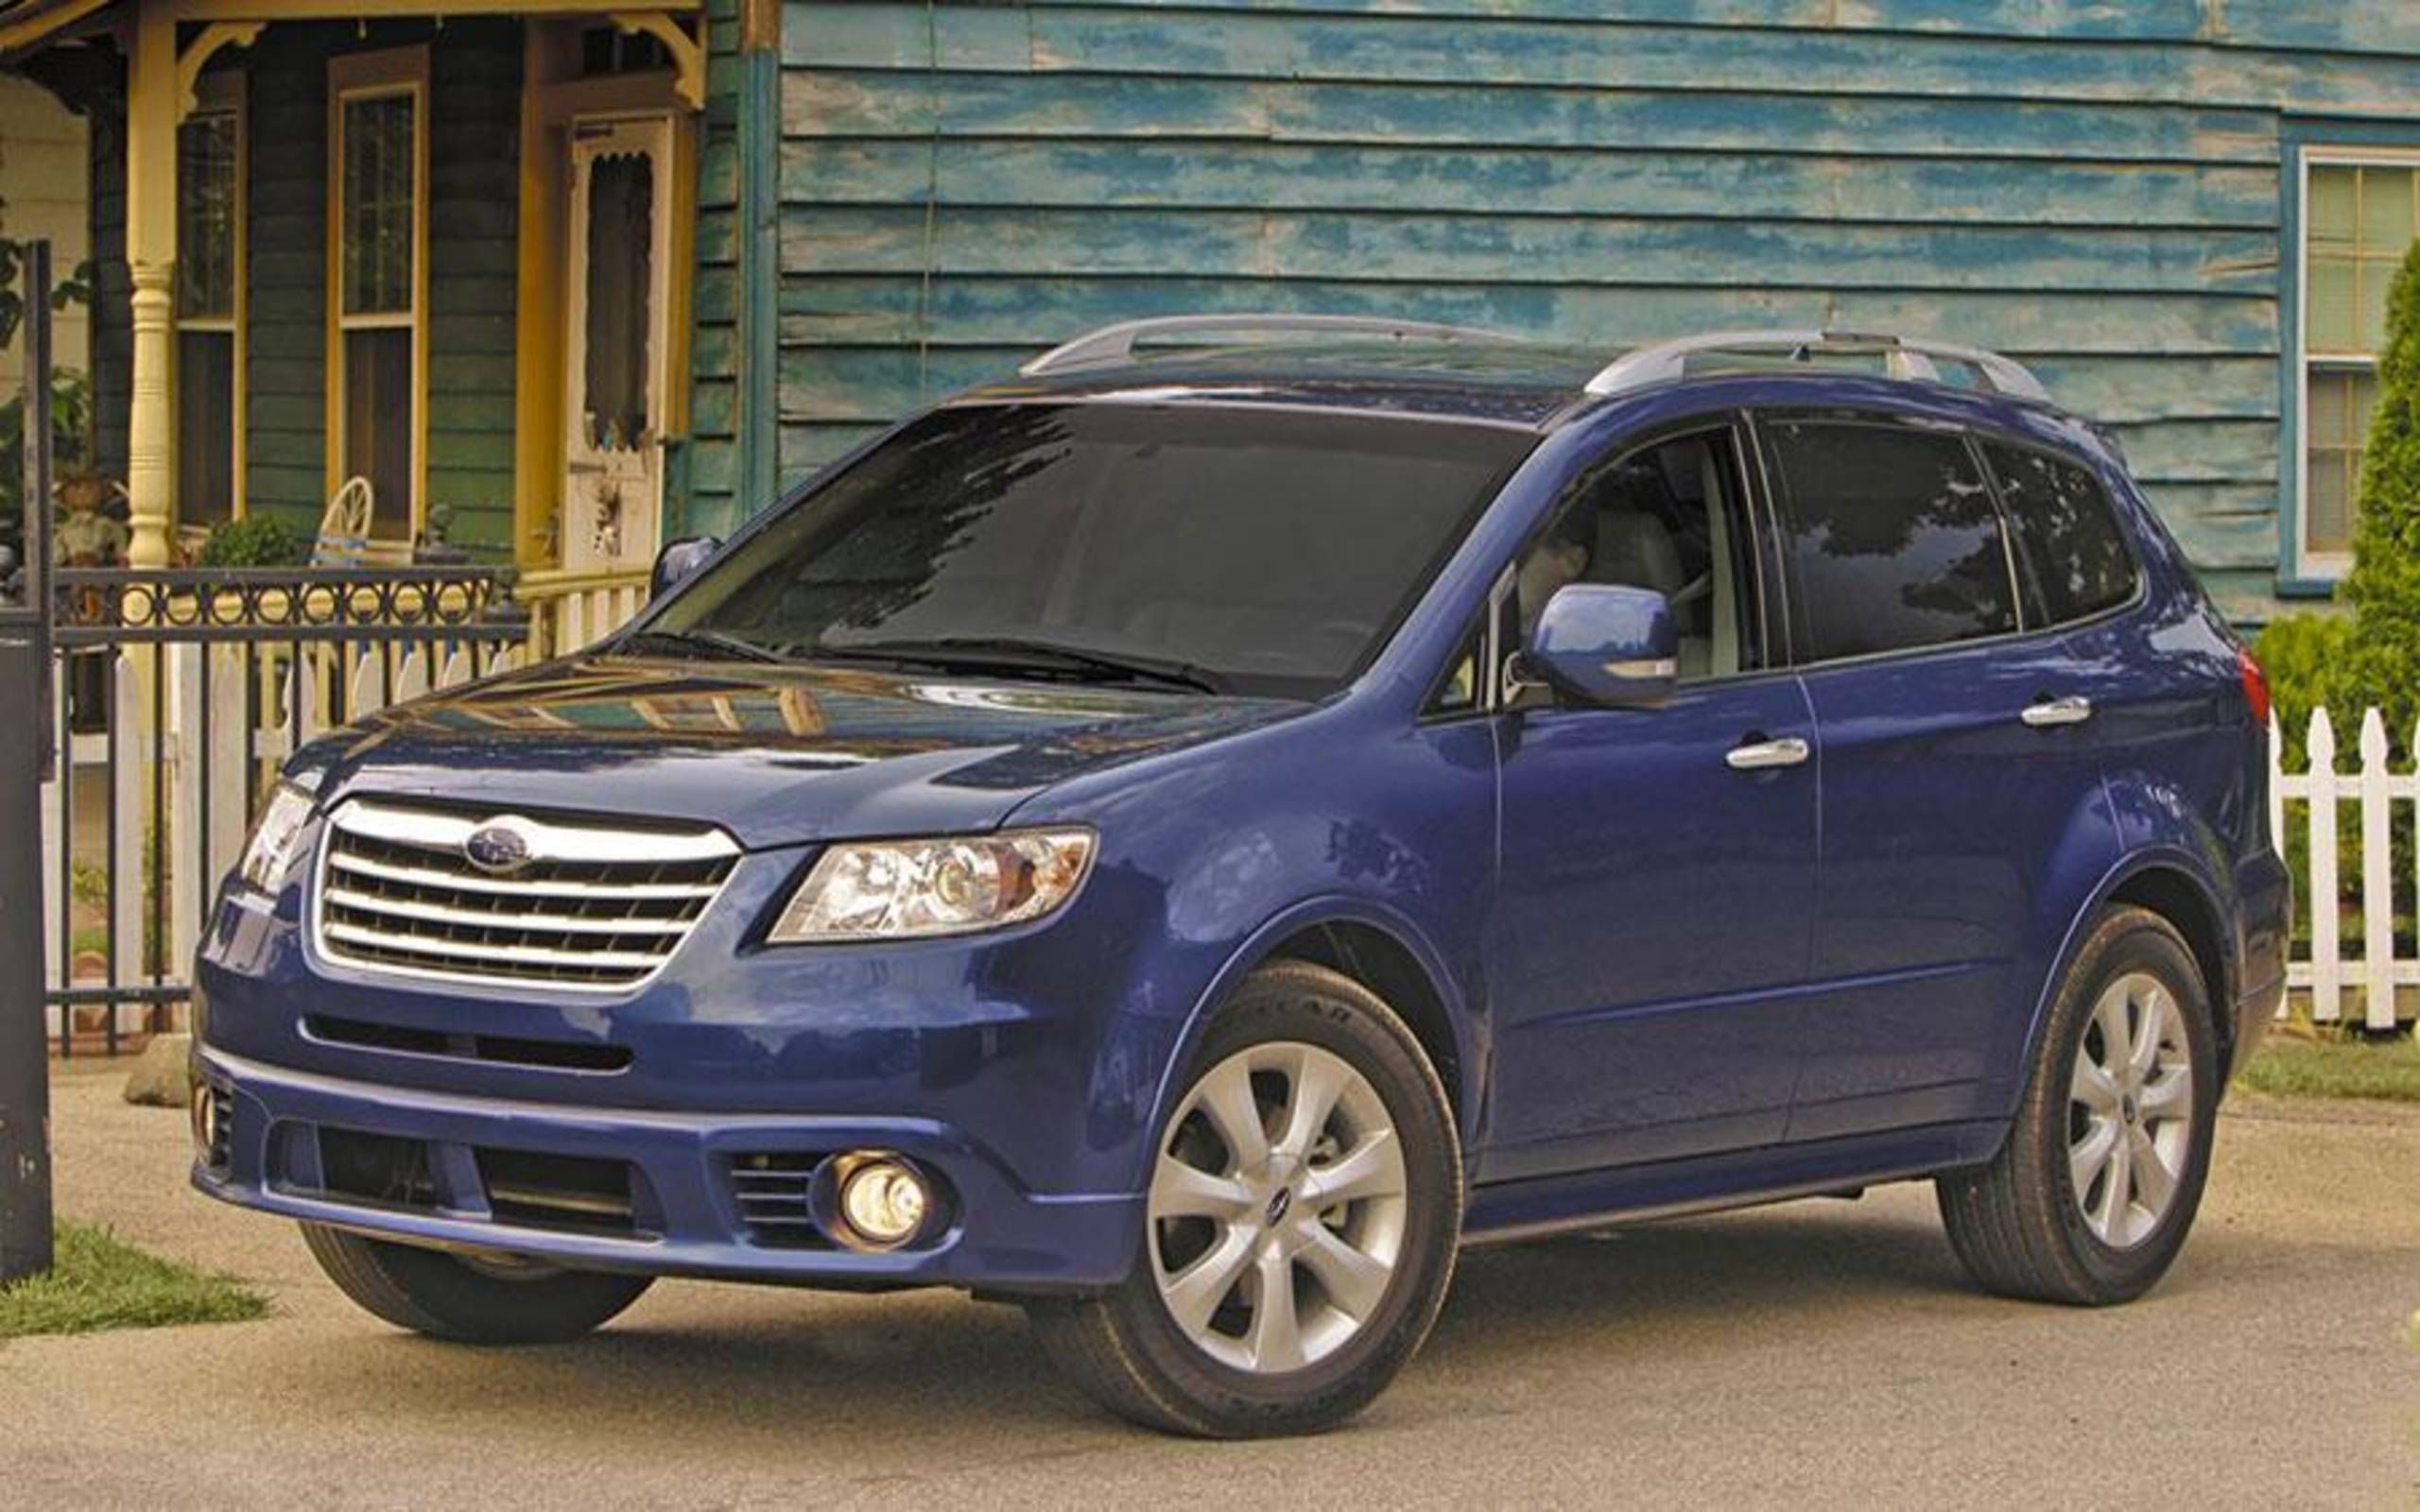 2012 Subaru Tribeca Touring review notes: Still a reasonable SUV despite  its age